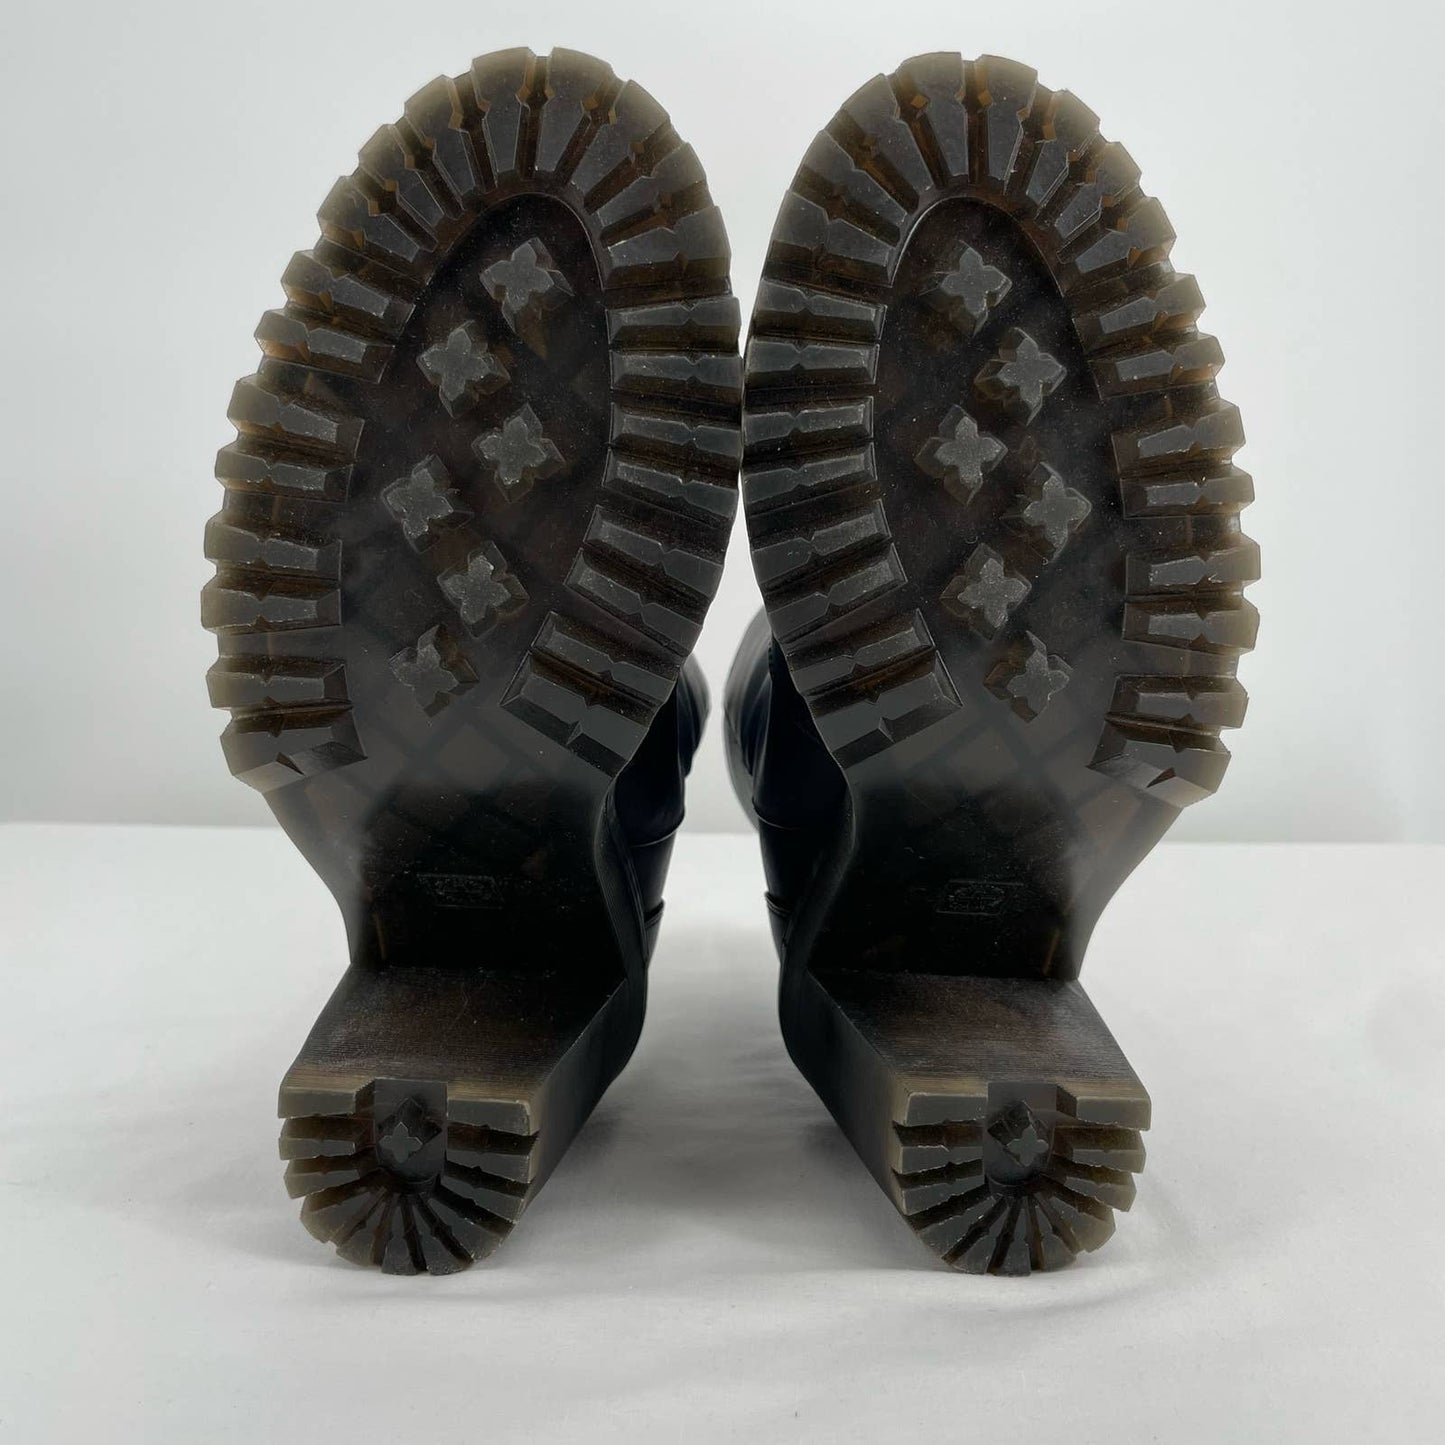 Dr. Martens Magdalena II Black Heeled Boots Zippers Lug Sole Chunky Heel Size 9